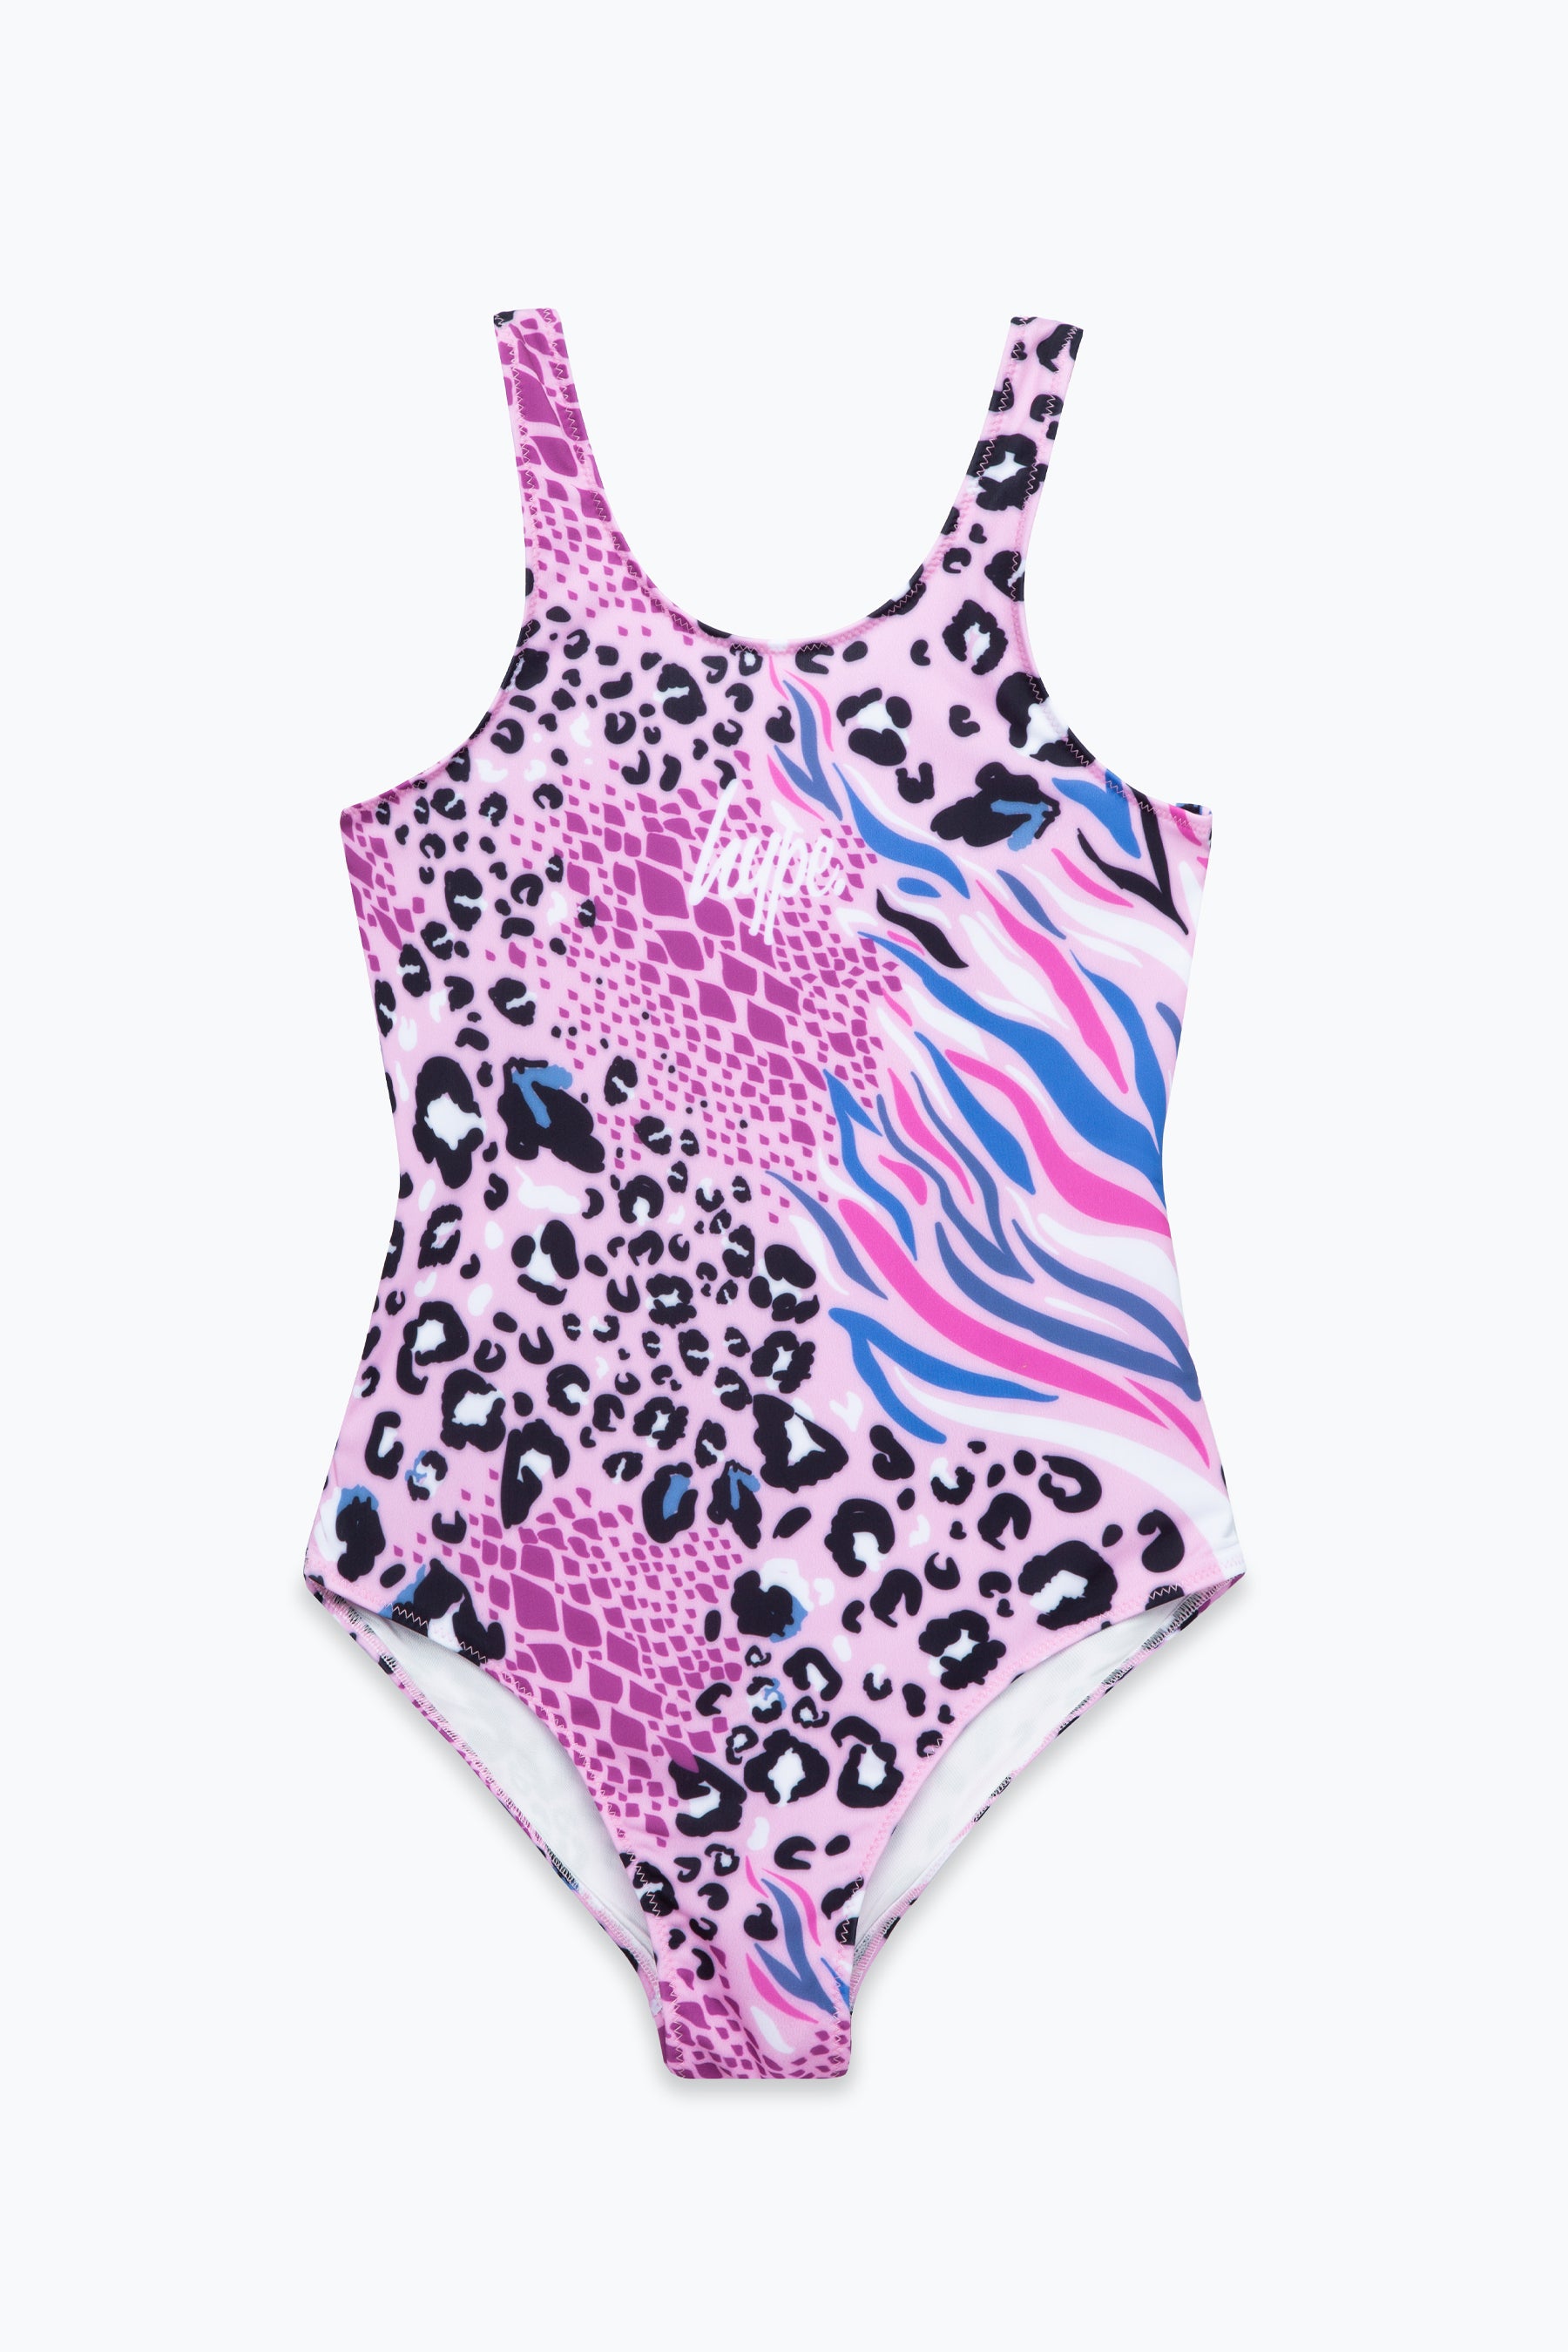 hype girls abstract leopard script swimsuit